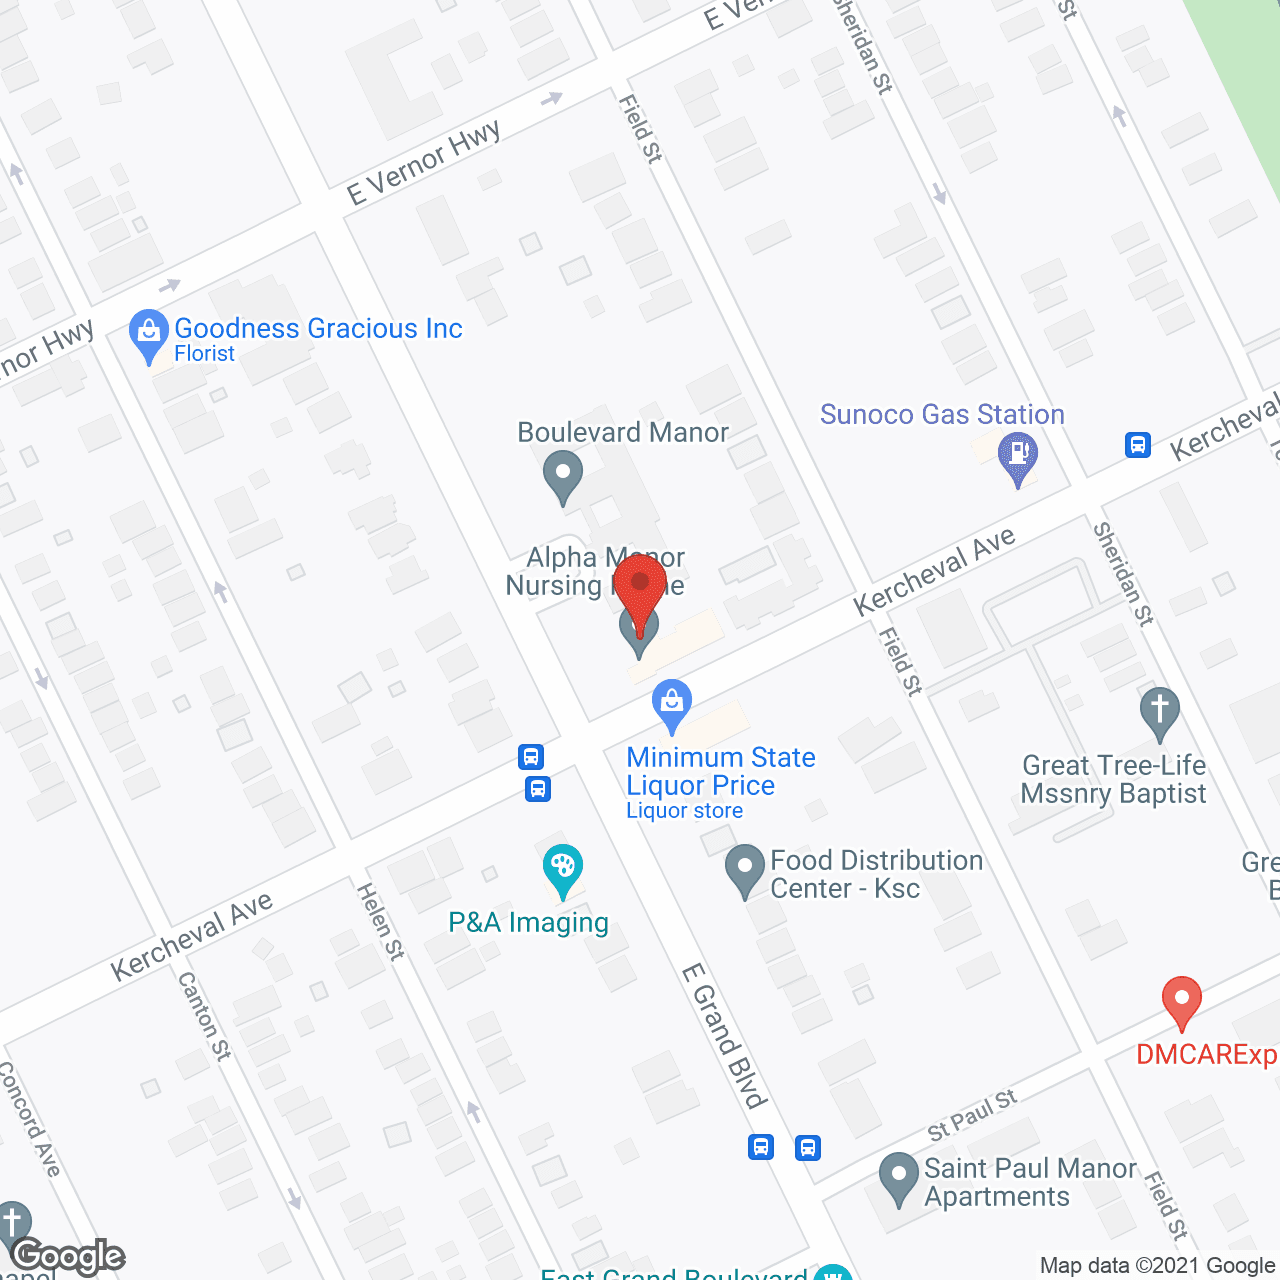 Alpha Manor Nursing Home in google map